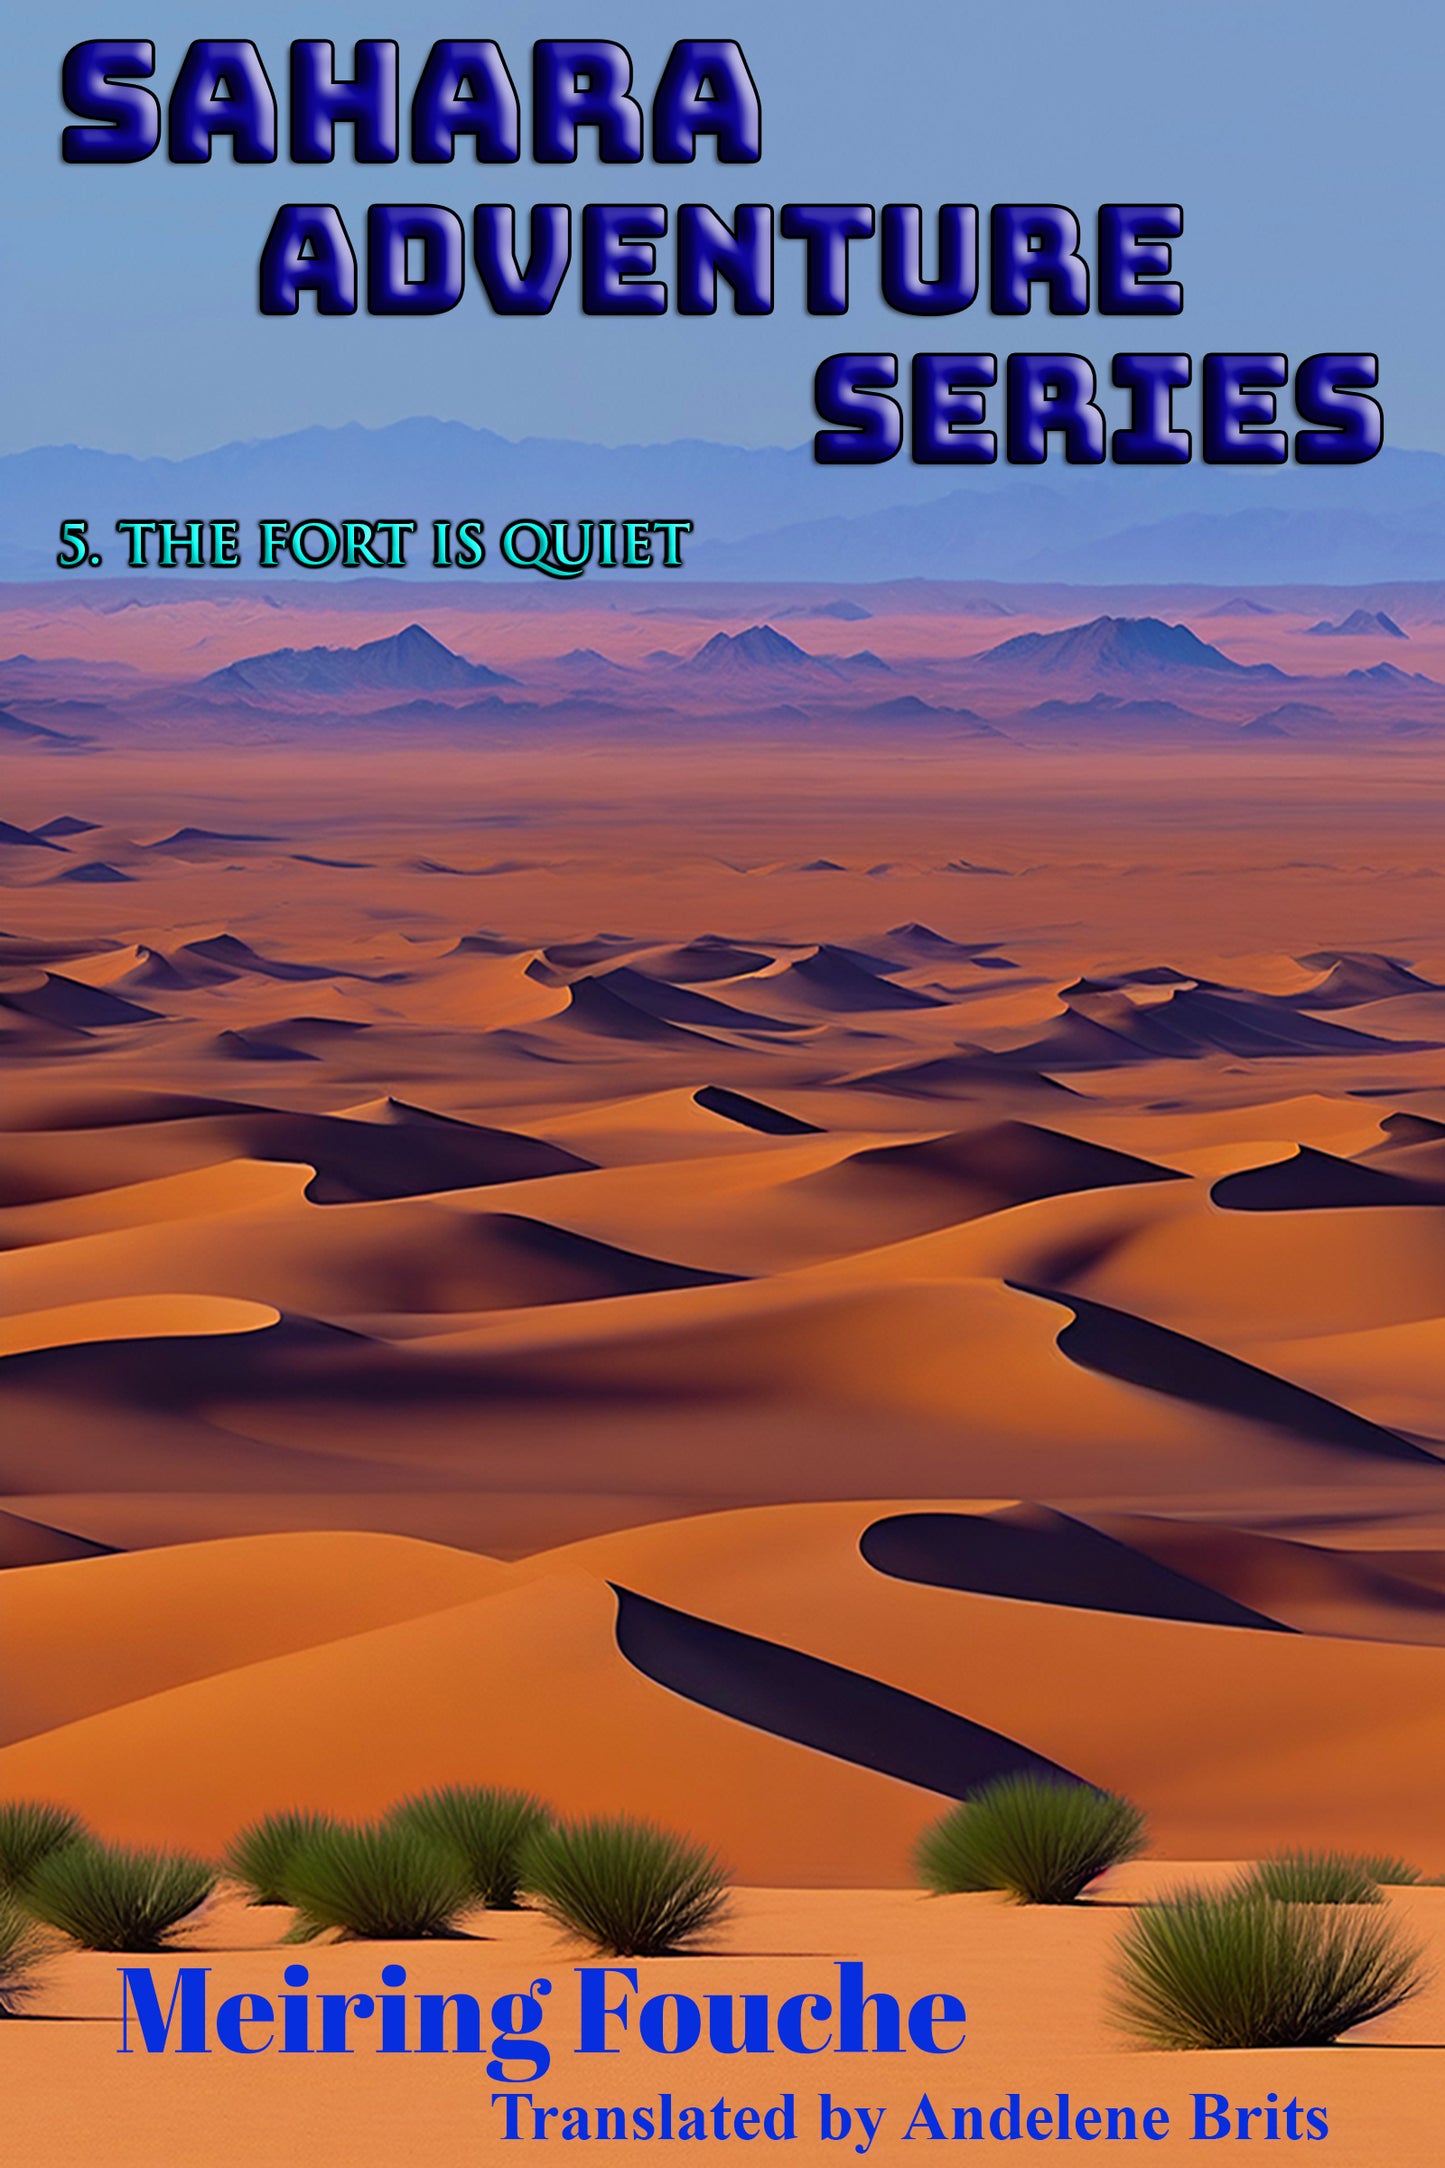 5. Sahara Adventure Series - The Fort is Quiet